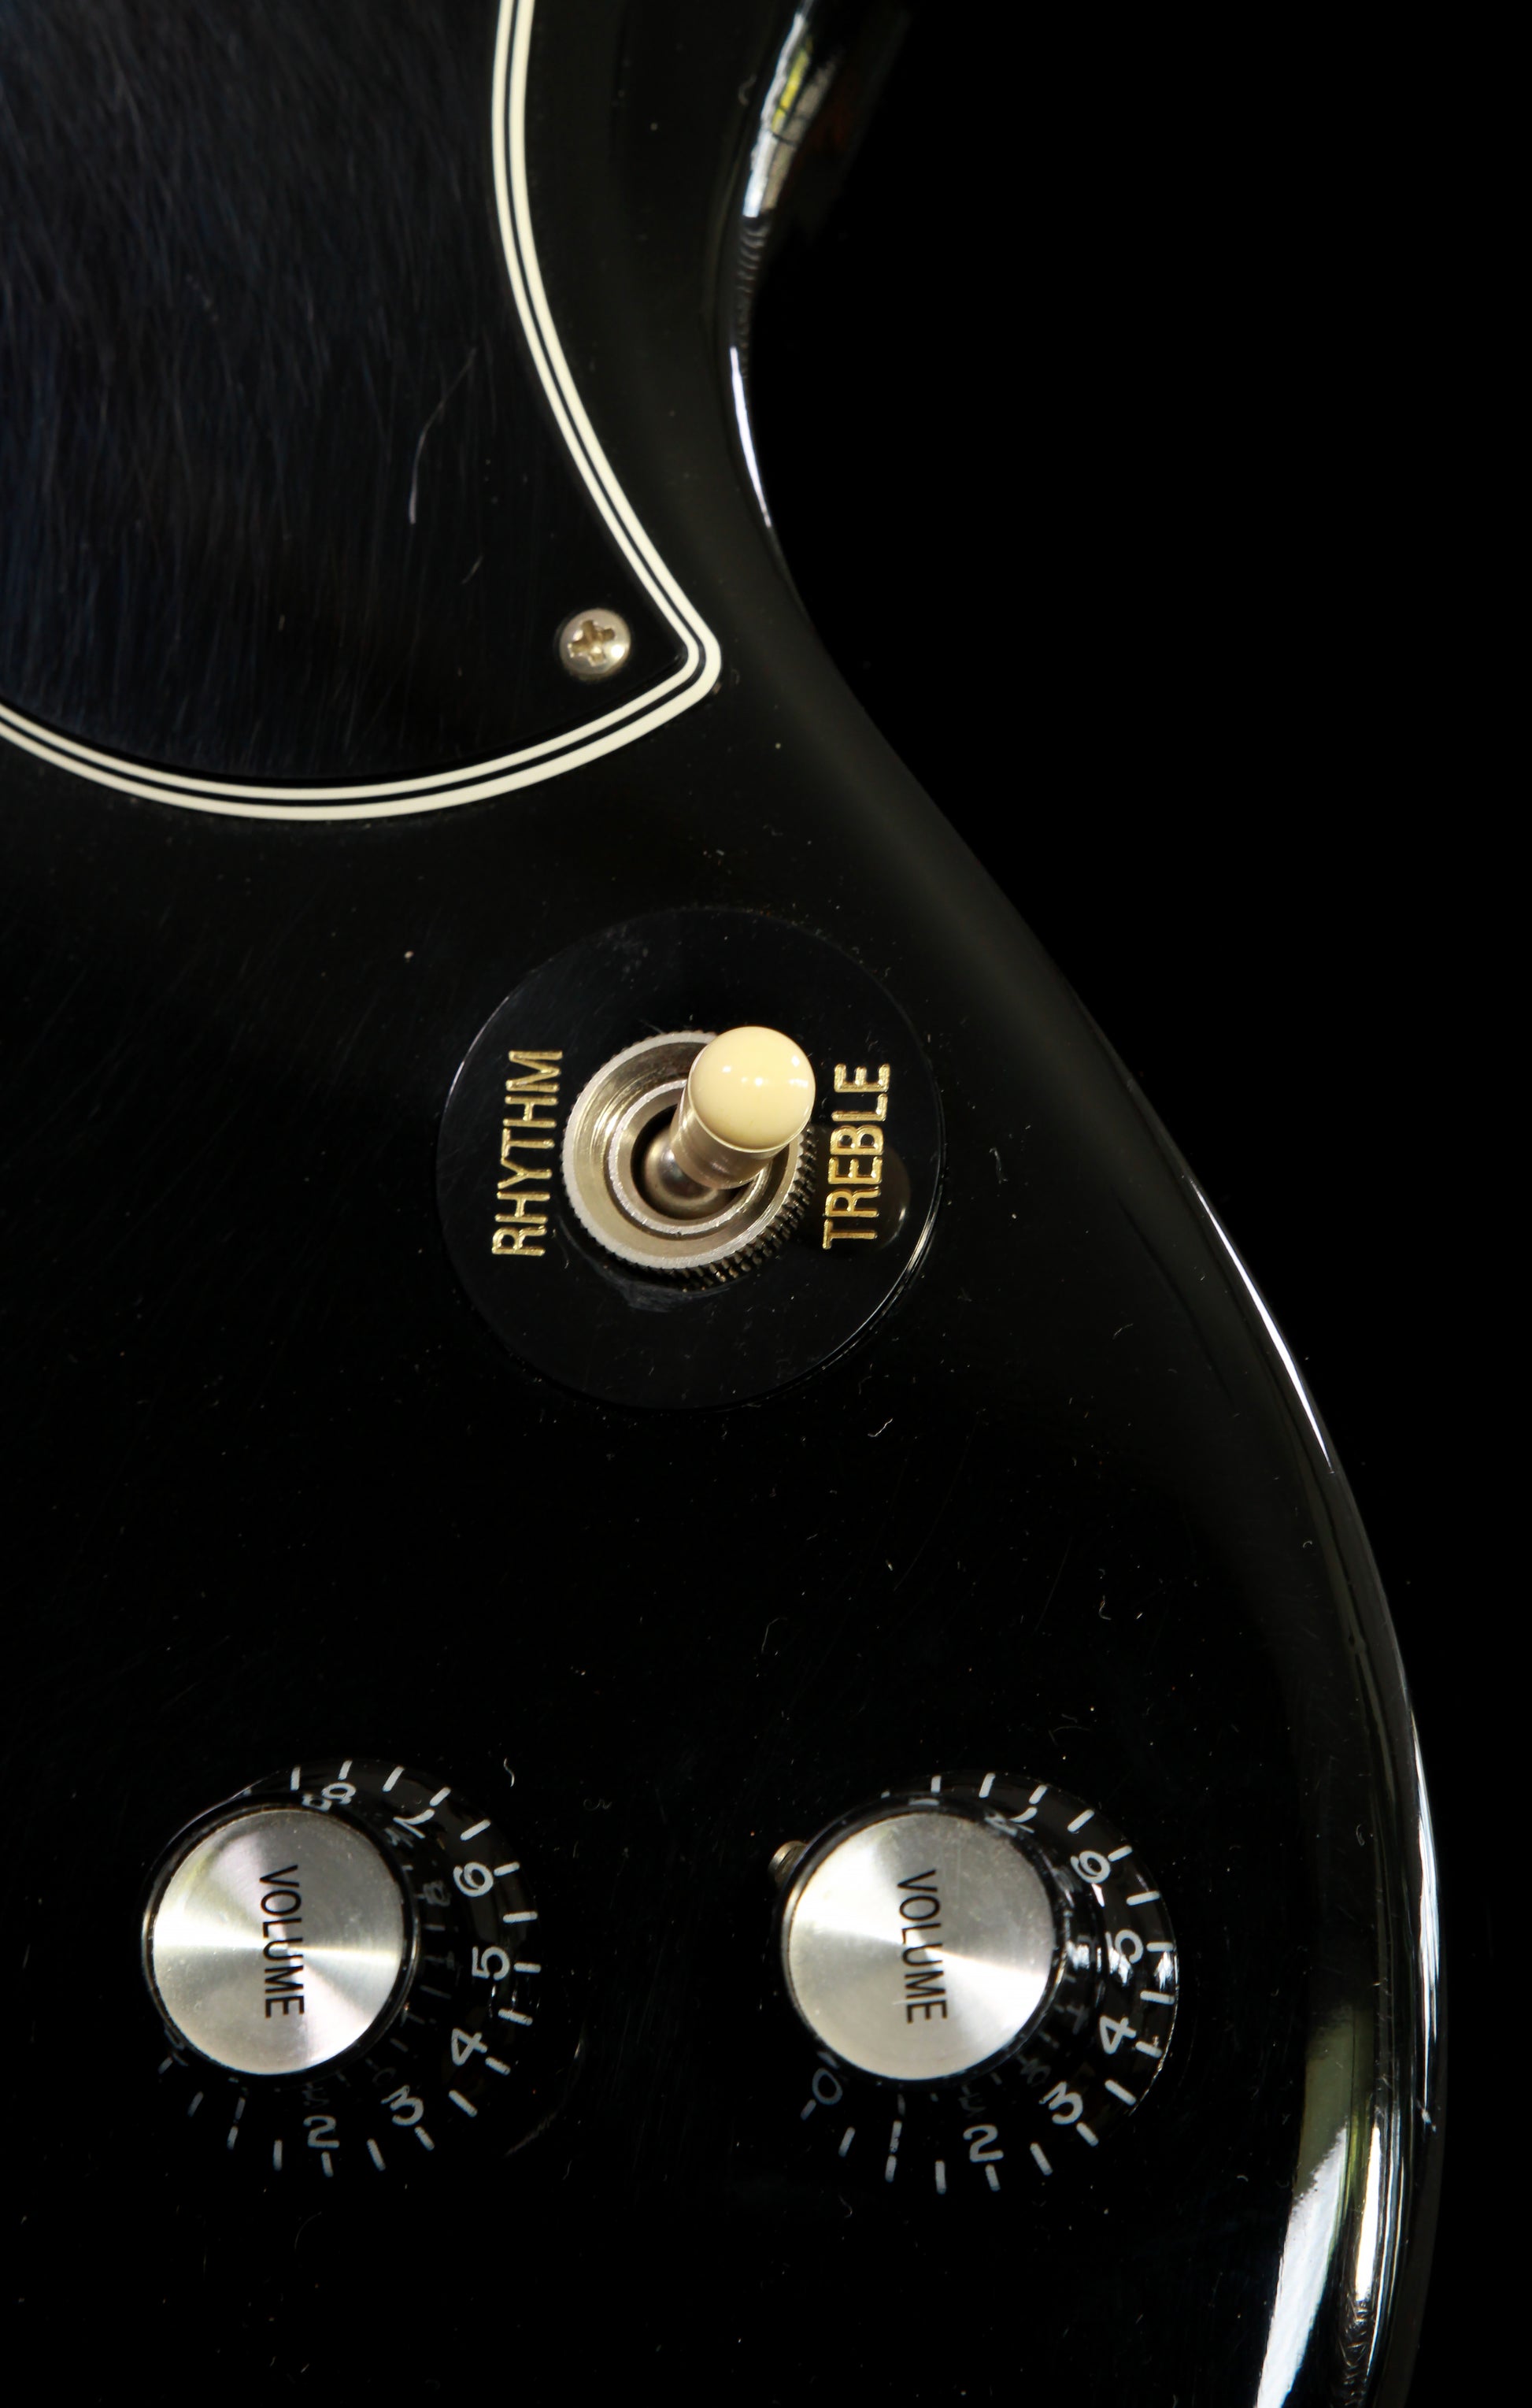 Gibson SG Standard Ebony 2013